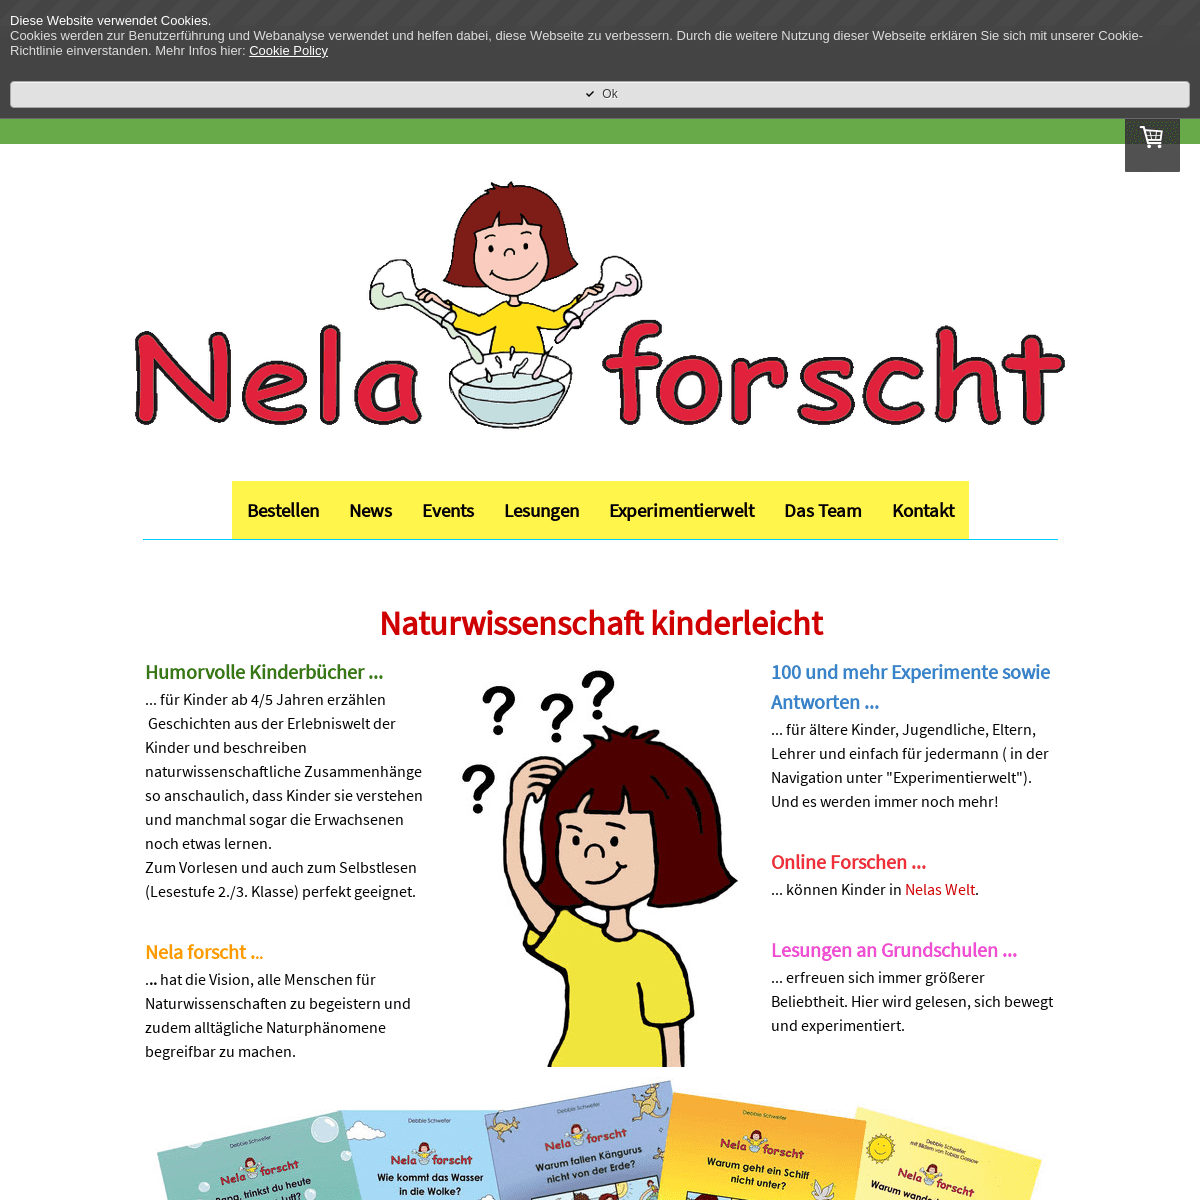 A complete backup of nela-forscht.de